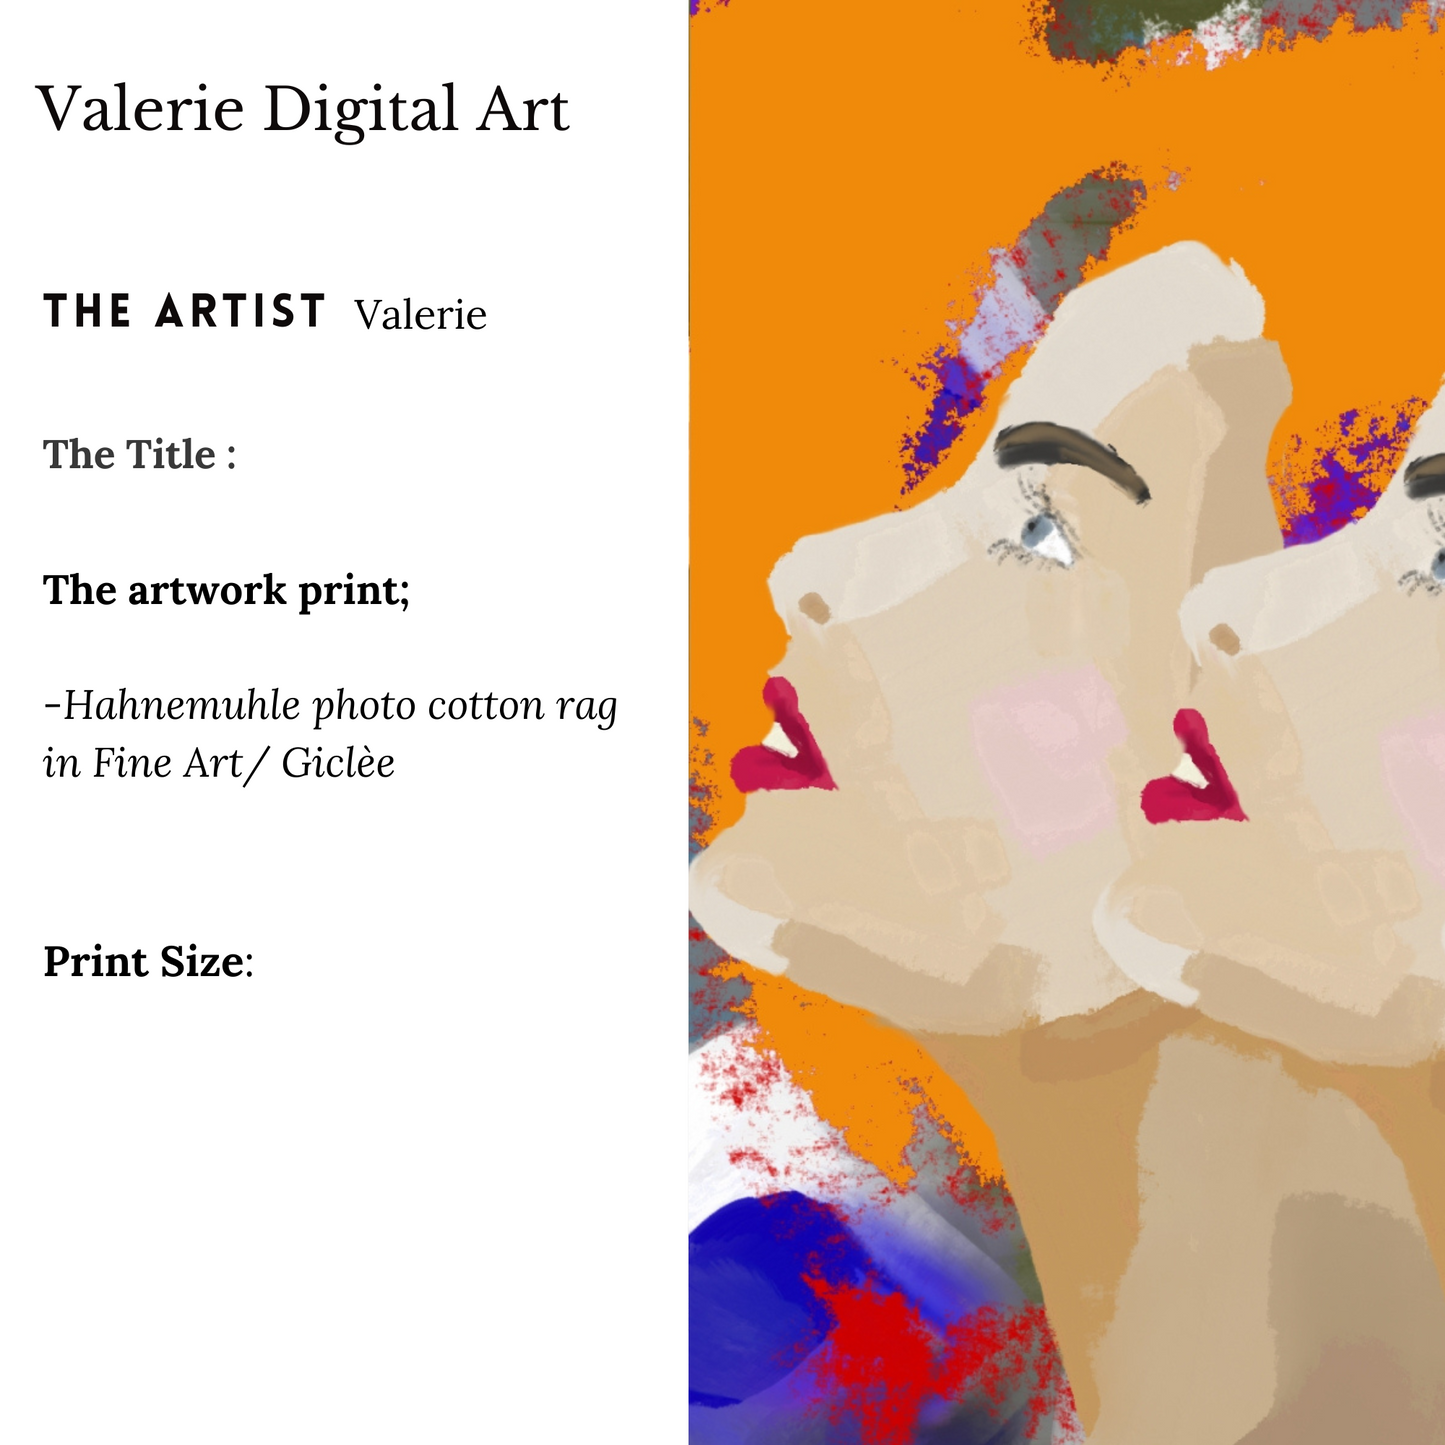 THE VOICE Hahnemühle Photo Rag Print - valerie-digital-art